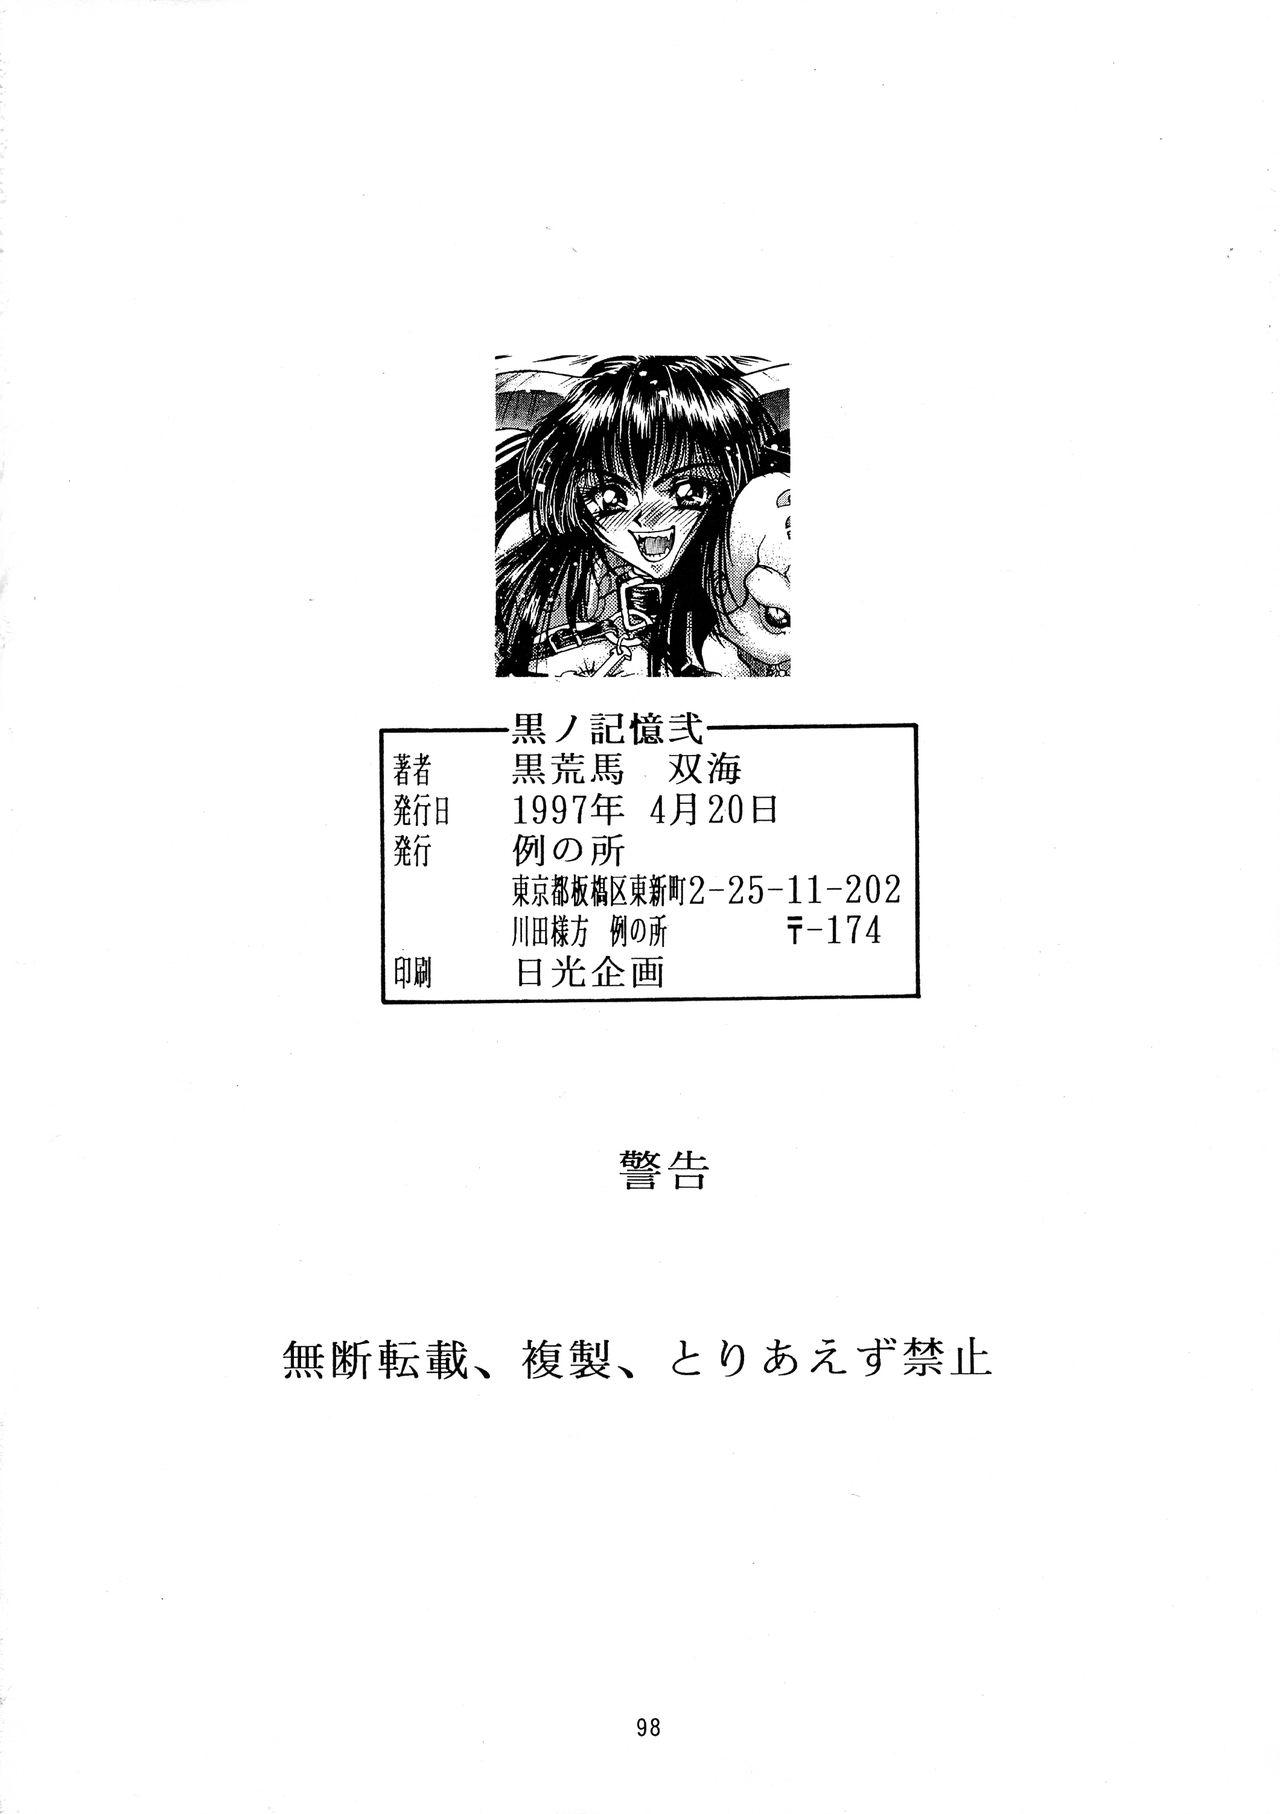 Sesso Kuro no Kioku Ni - Neon genesis evangelion Street fighter Berserk X men Masterbation - Page 98